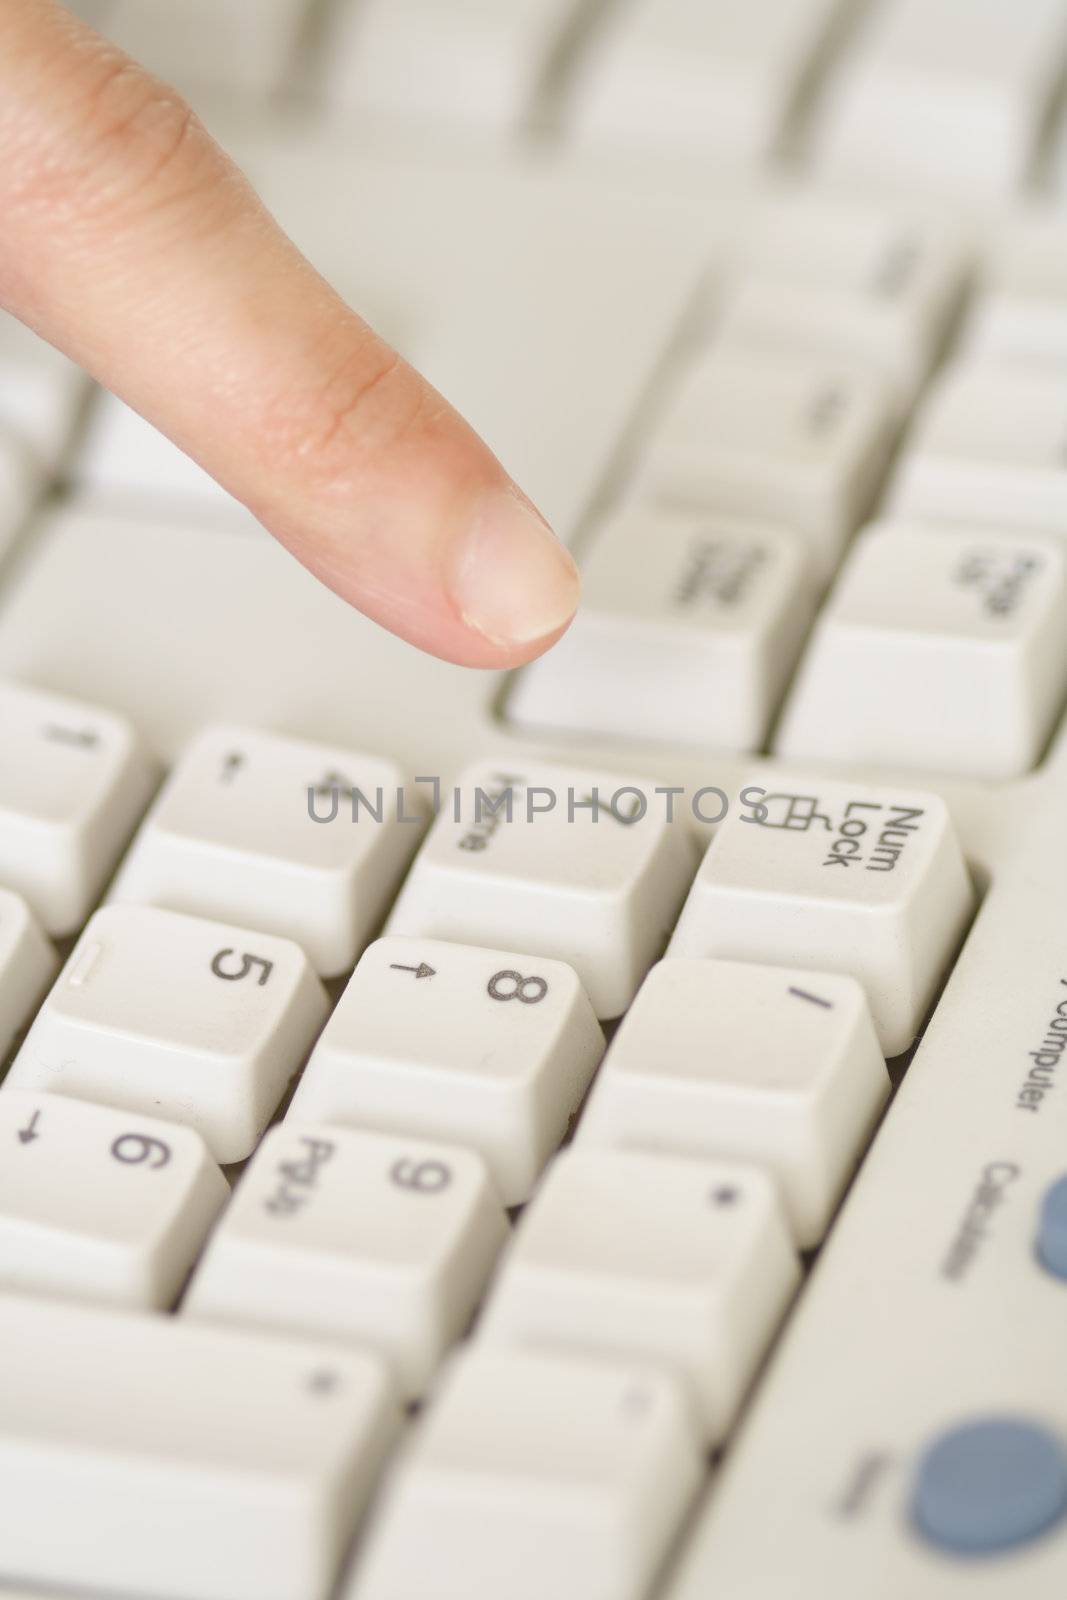 Finger on keyboard typing